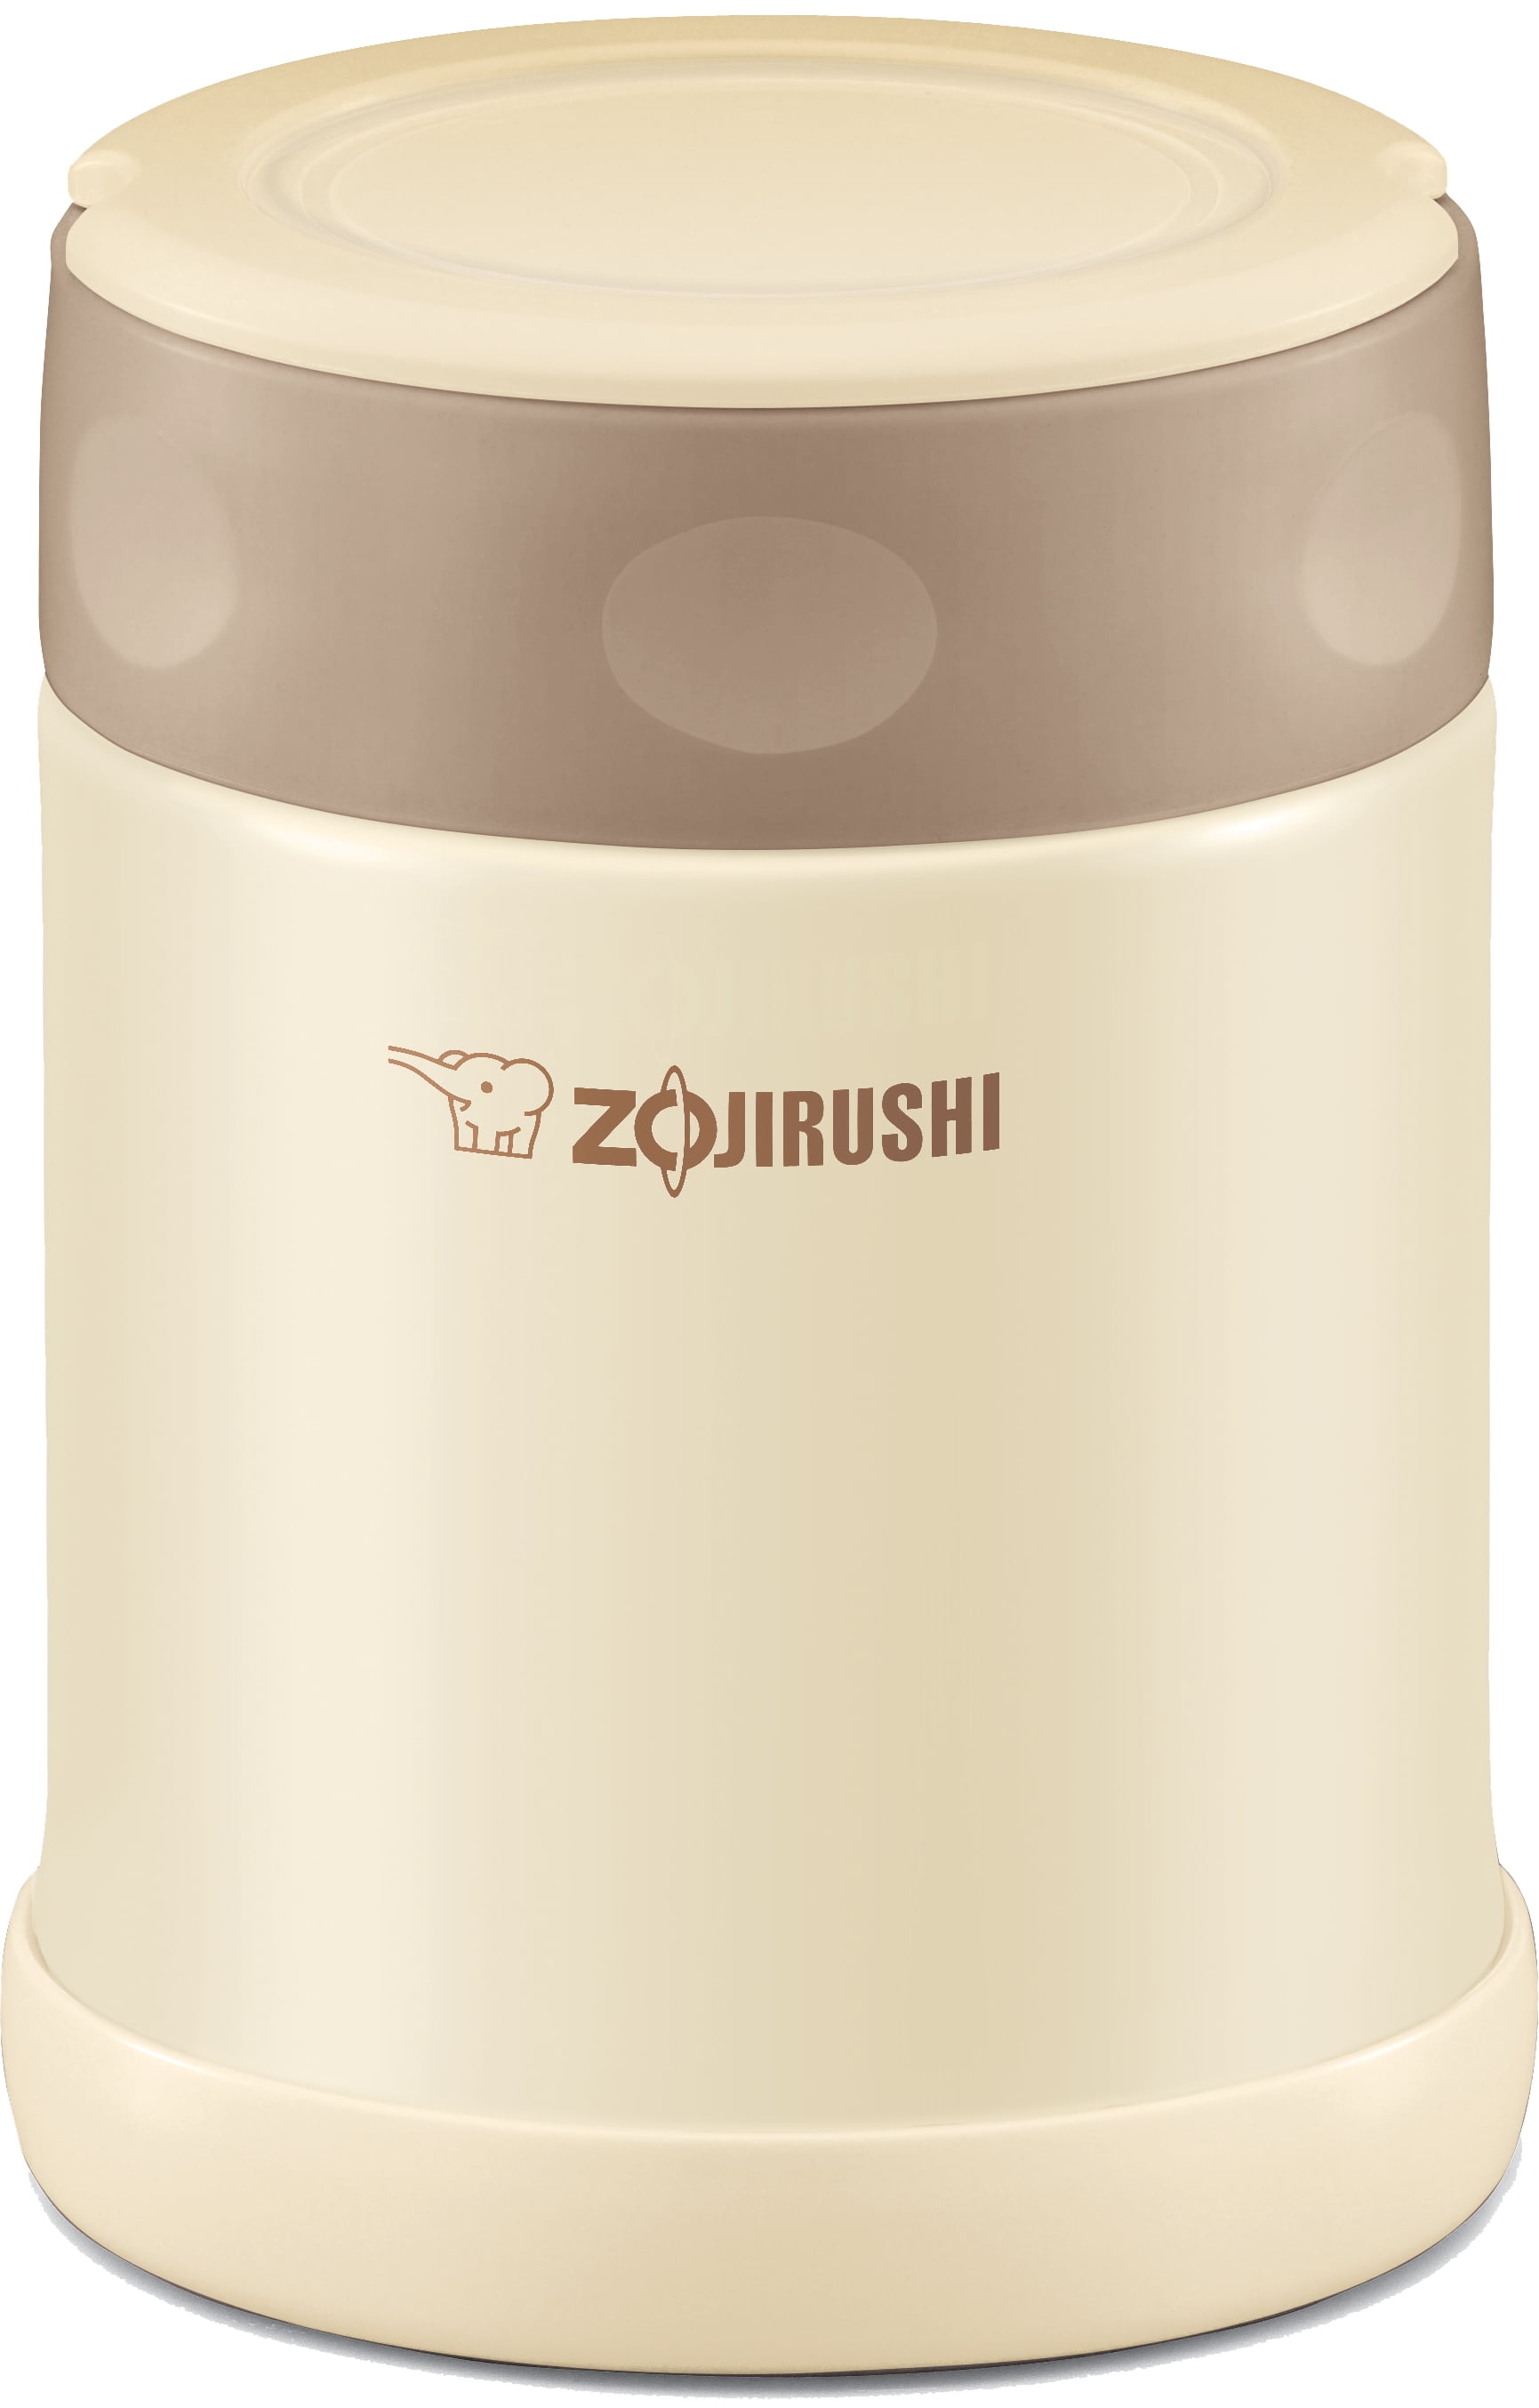 Zojirushi Stainless Steel Food Jar 18 oz - Bed Bath & Beyond - 37865521